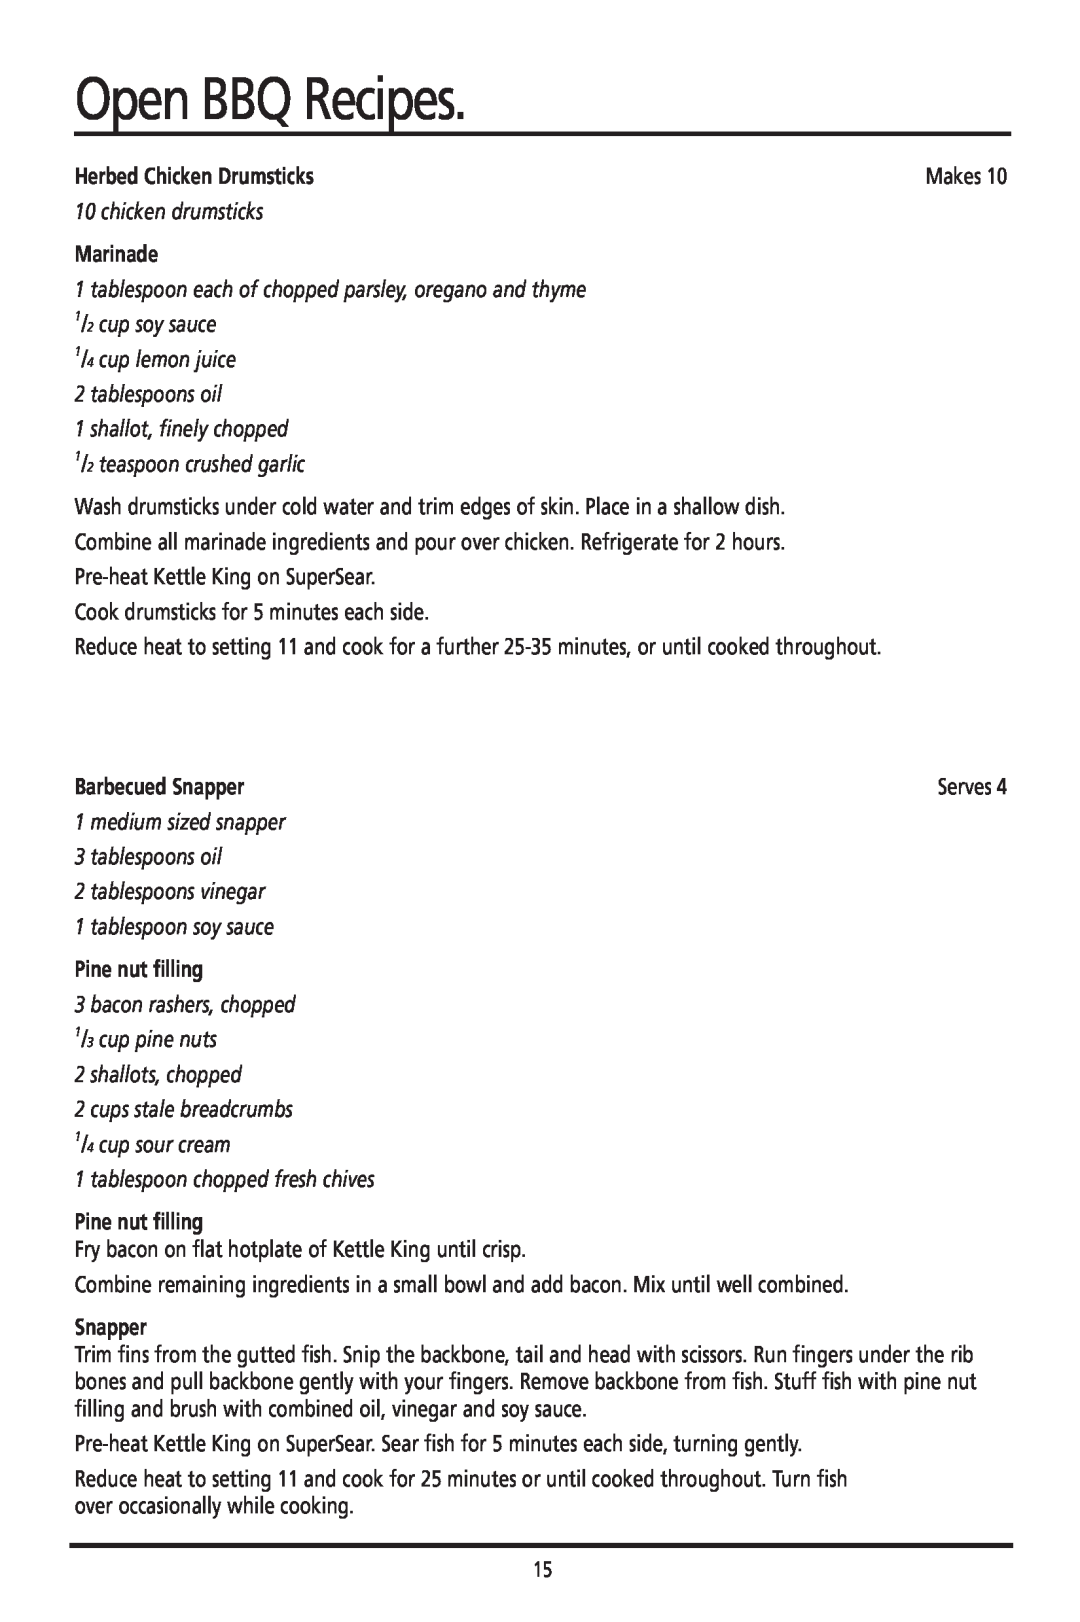 Sunbeam HG6600 manual Open BBQ Recipes, Herbed Chicken Drumsticks, chicken drumsticks, Marinade, Barbecued Snapper 